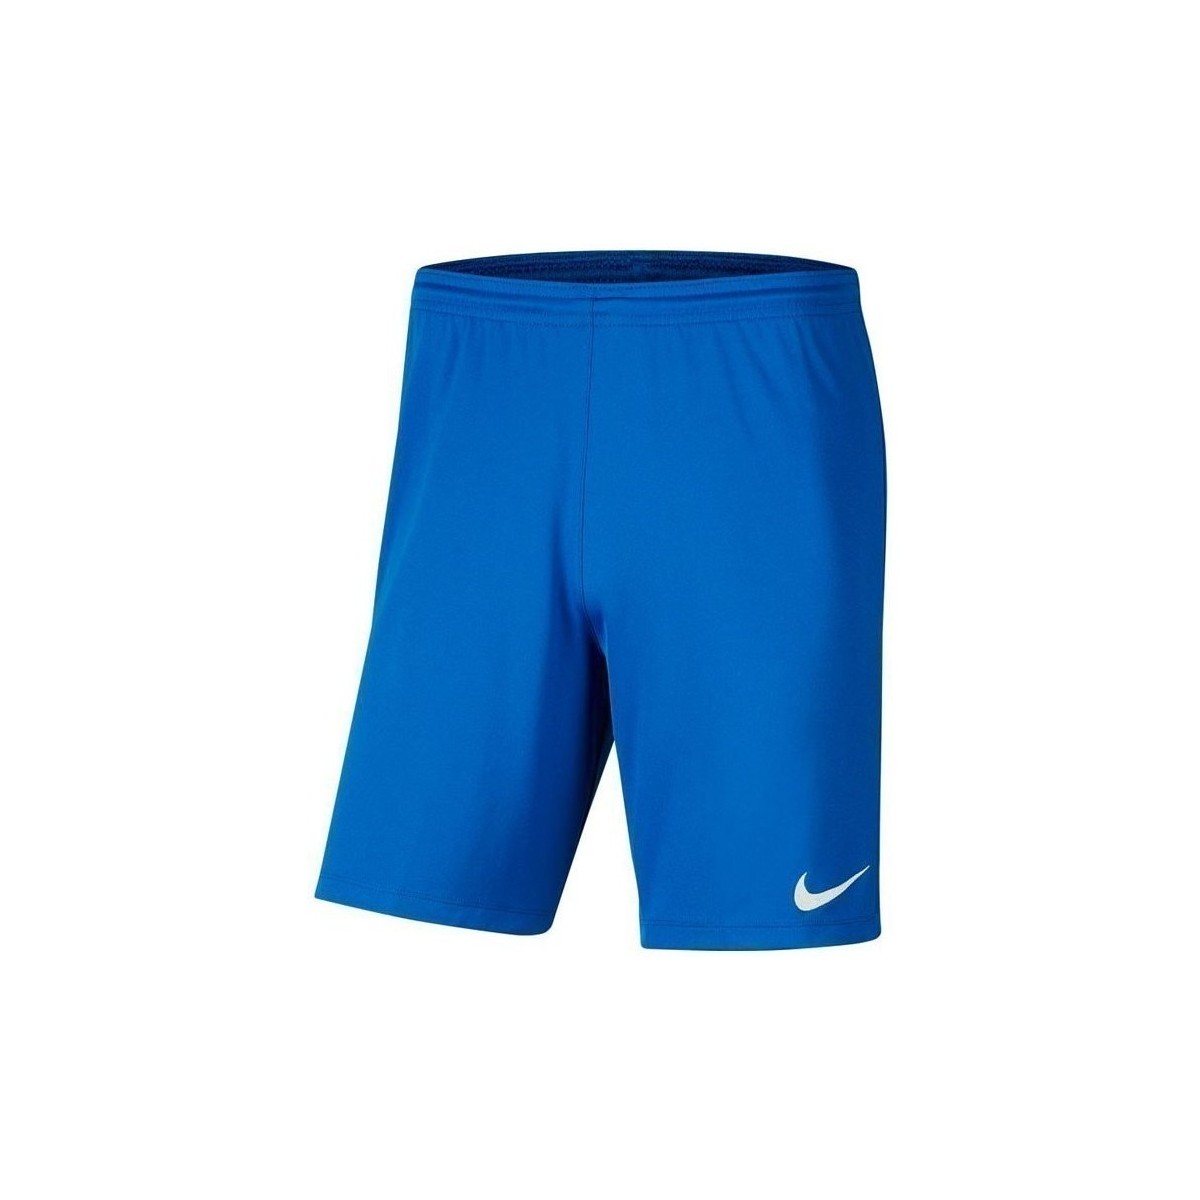 Vêtements Homme Pantacourts Nike Dry Park Iii Bleu